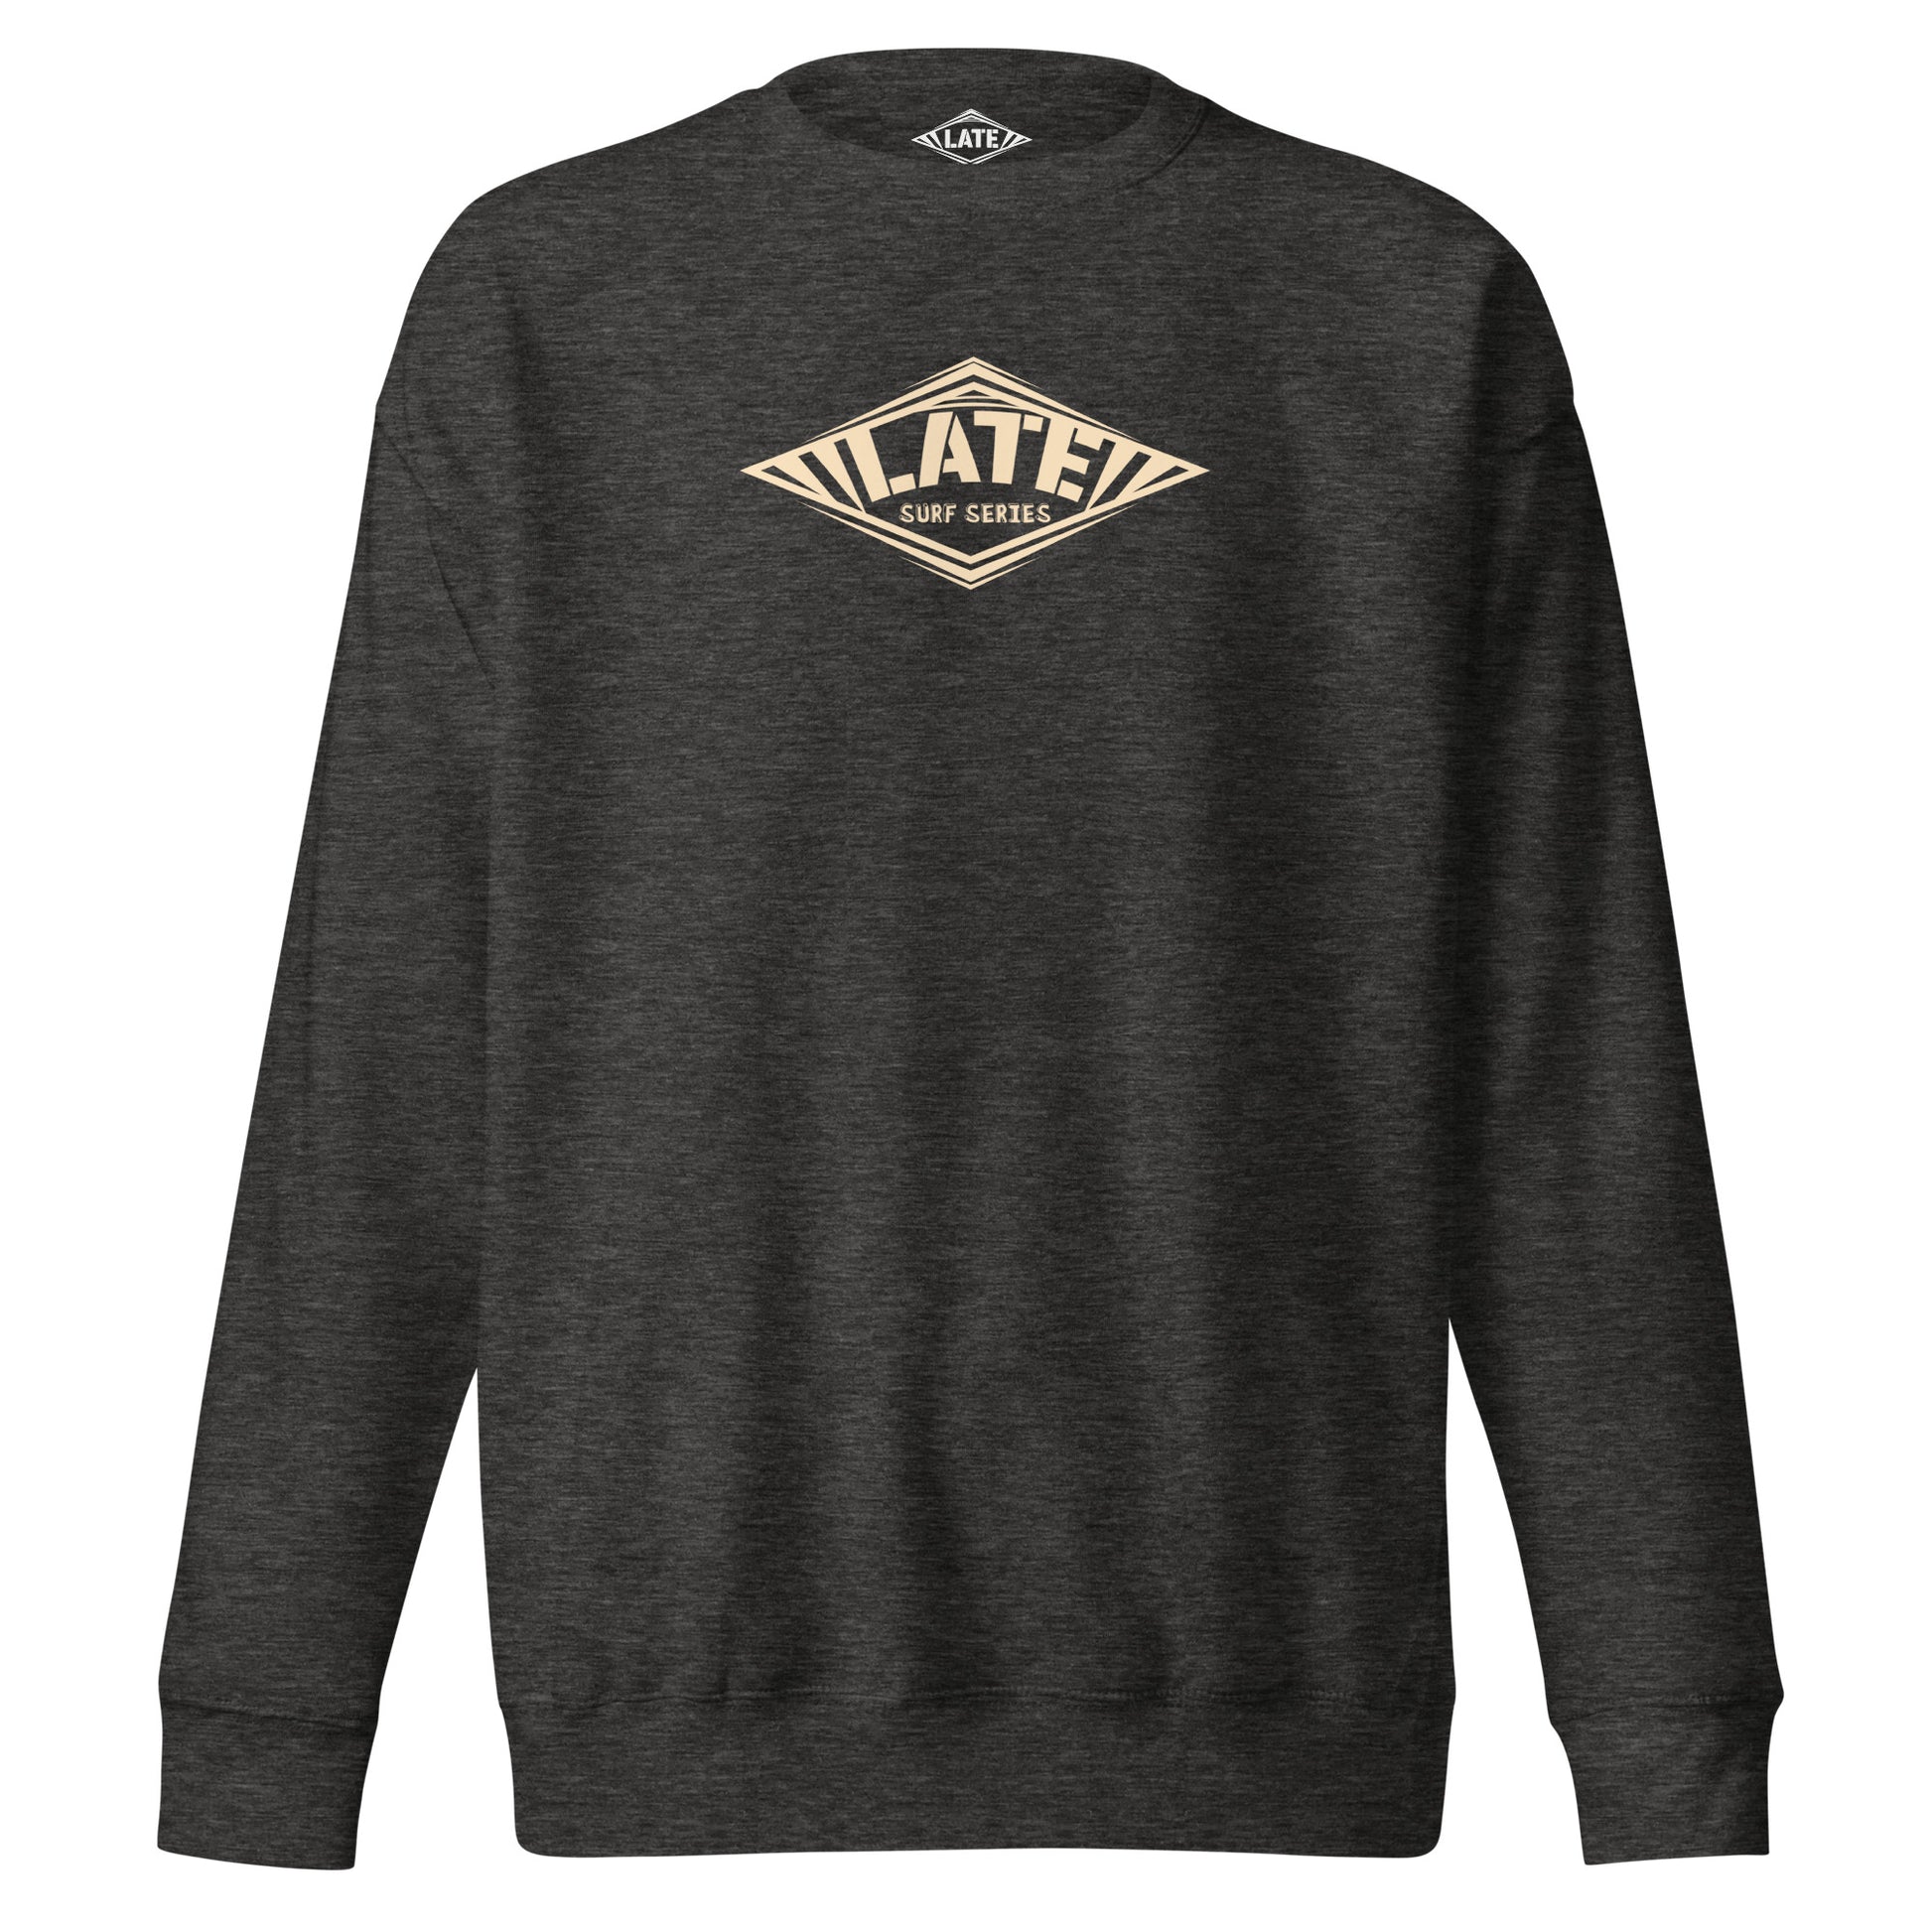 Sweatshirt Take On The Elements surf series logo Late sweat unisex charcoal